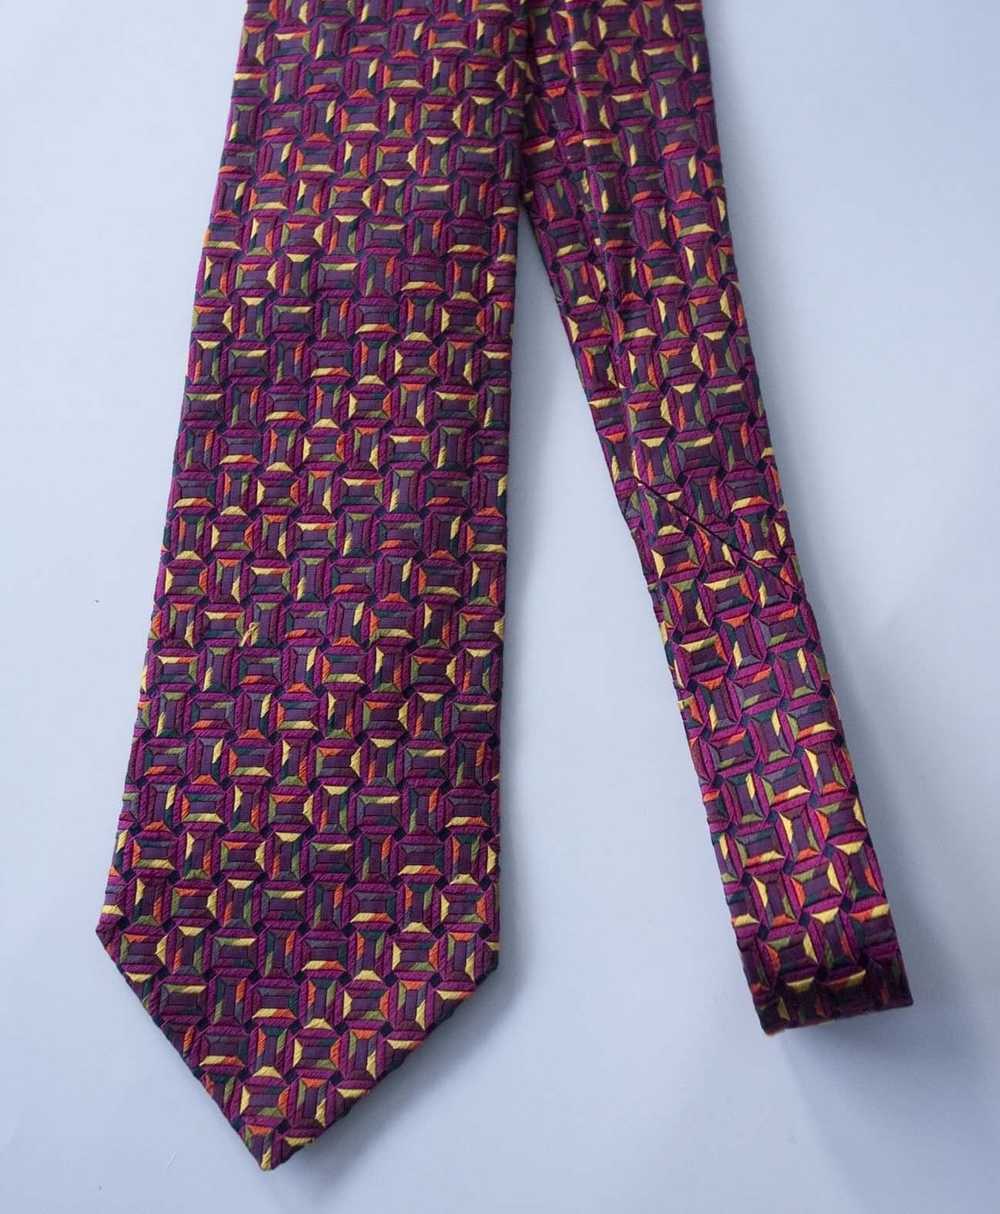 Etro Etro Milano Tie Red 100% Silk Made in Italy - image 3